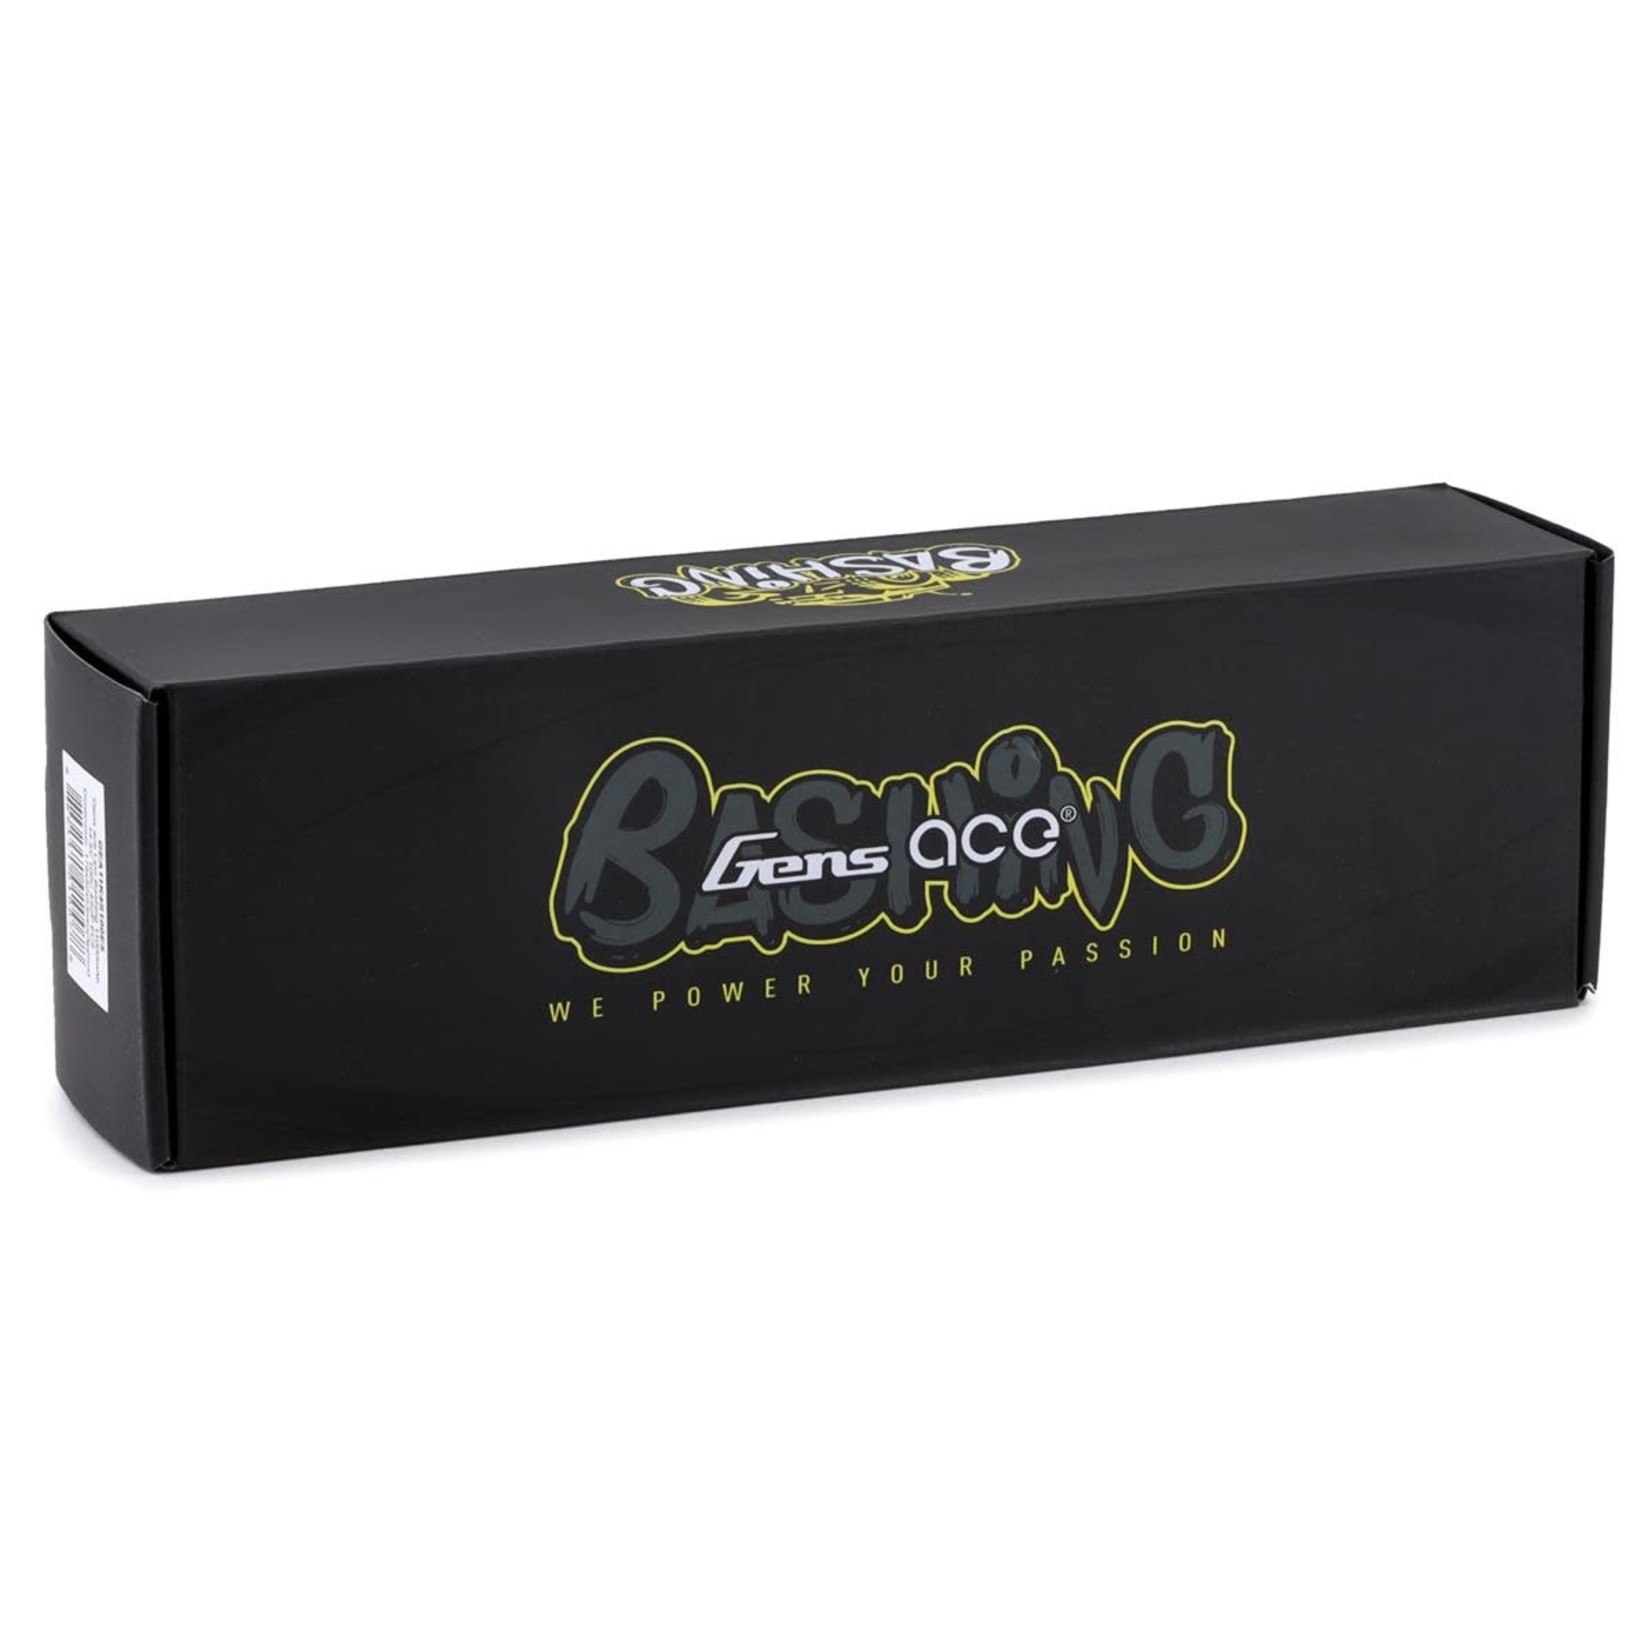 Gens Ace Gens Ace Bashing Pro 4s LiPo Battery Pack 100C (14.8V/11000mAh) w/EC5 Connector #GEA11K4S100E5